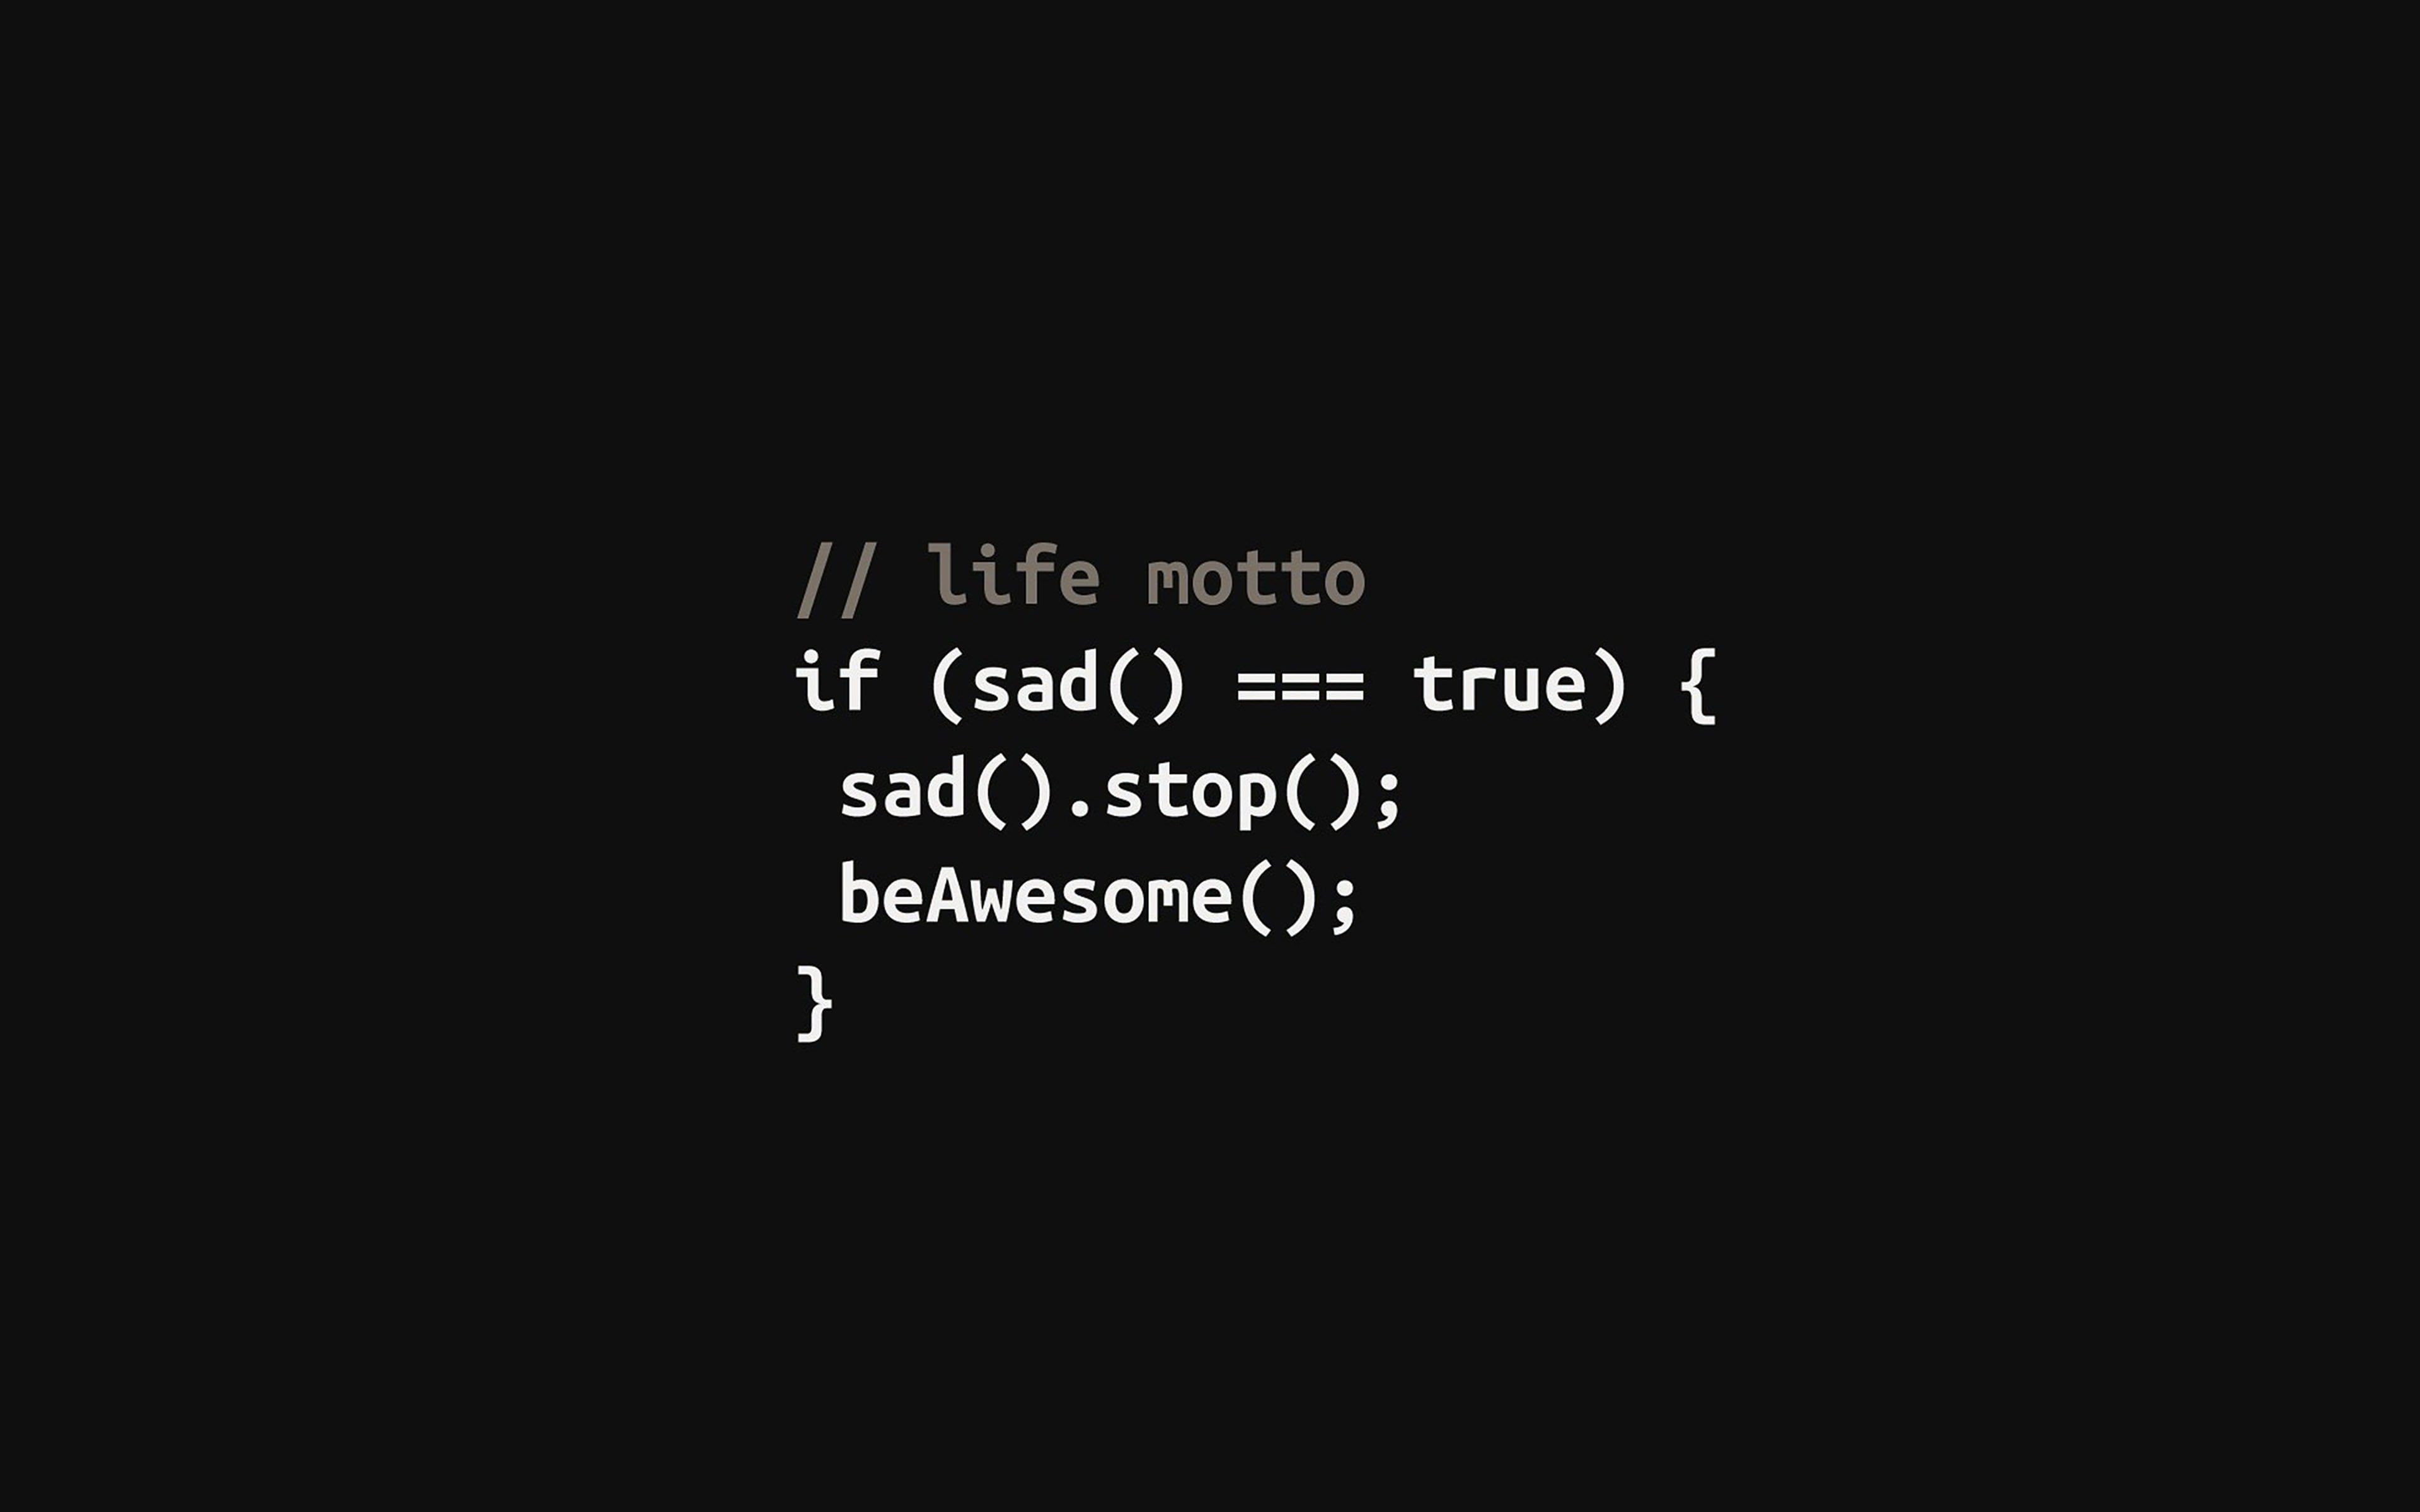 wallpaper #programmers #life #motto K #wallpaper #hdwallpaper #desktop. Life motto, Programmer, Motto